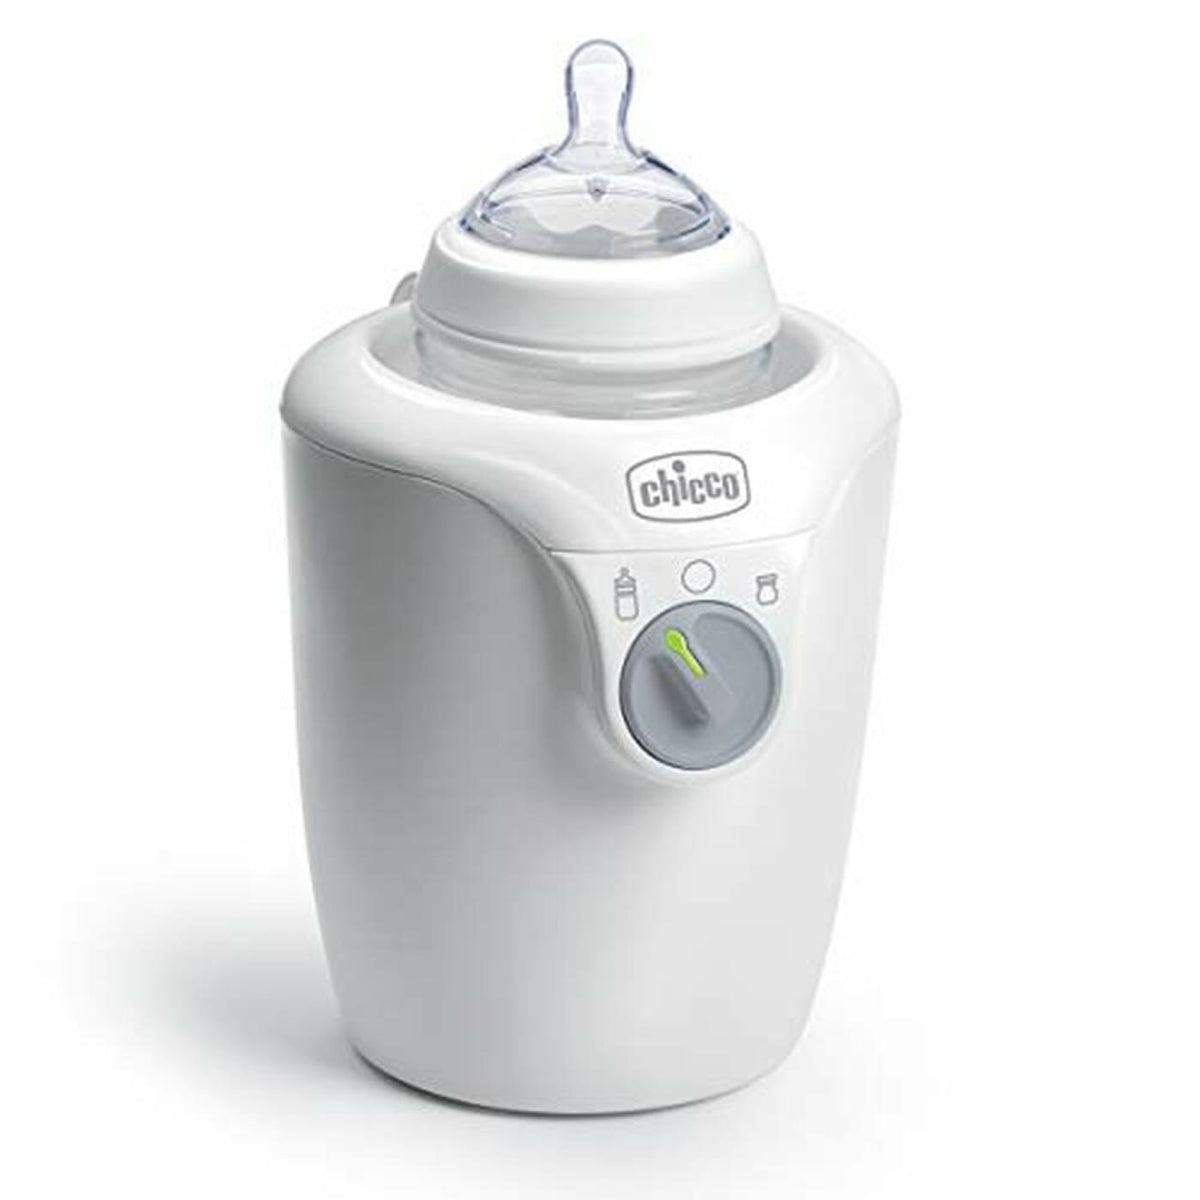 Chicco Home Bottle Warmer - NURSING &amp; FEEDING - STEAMERS/BLENDERS/WARMERS